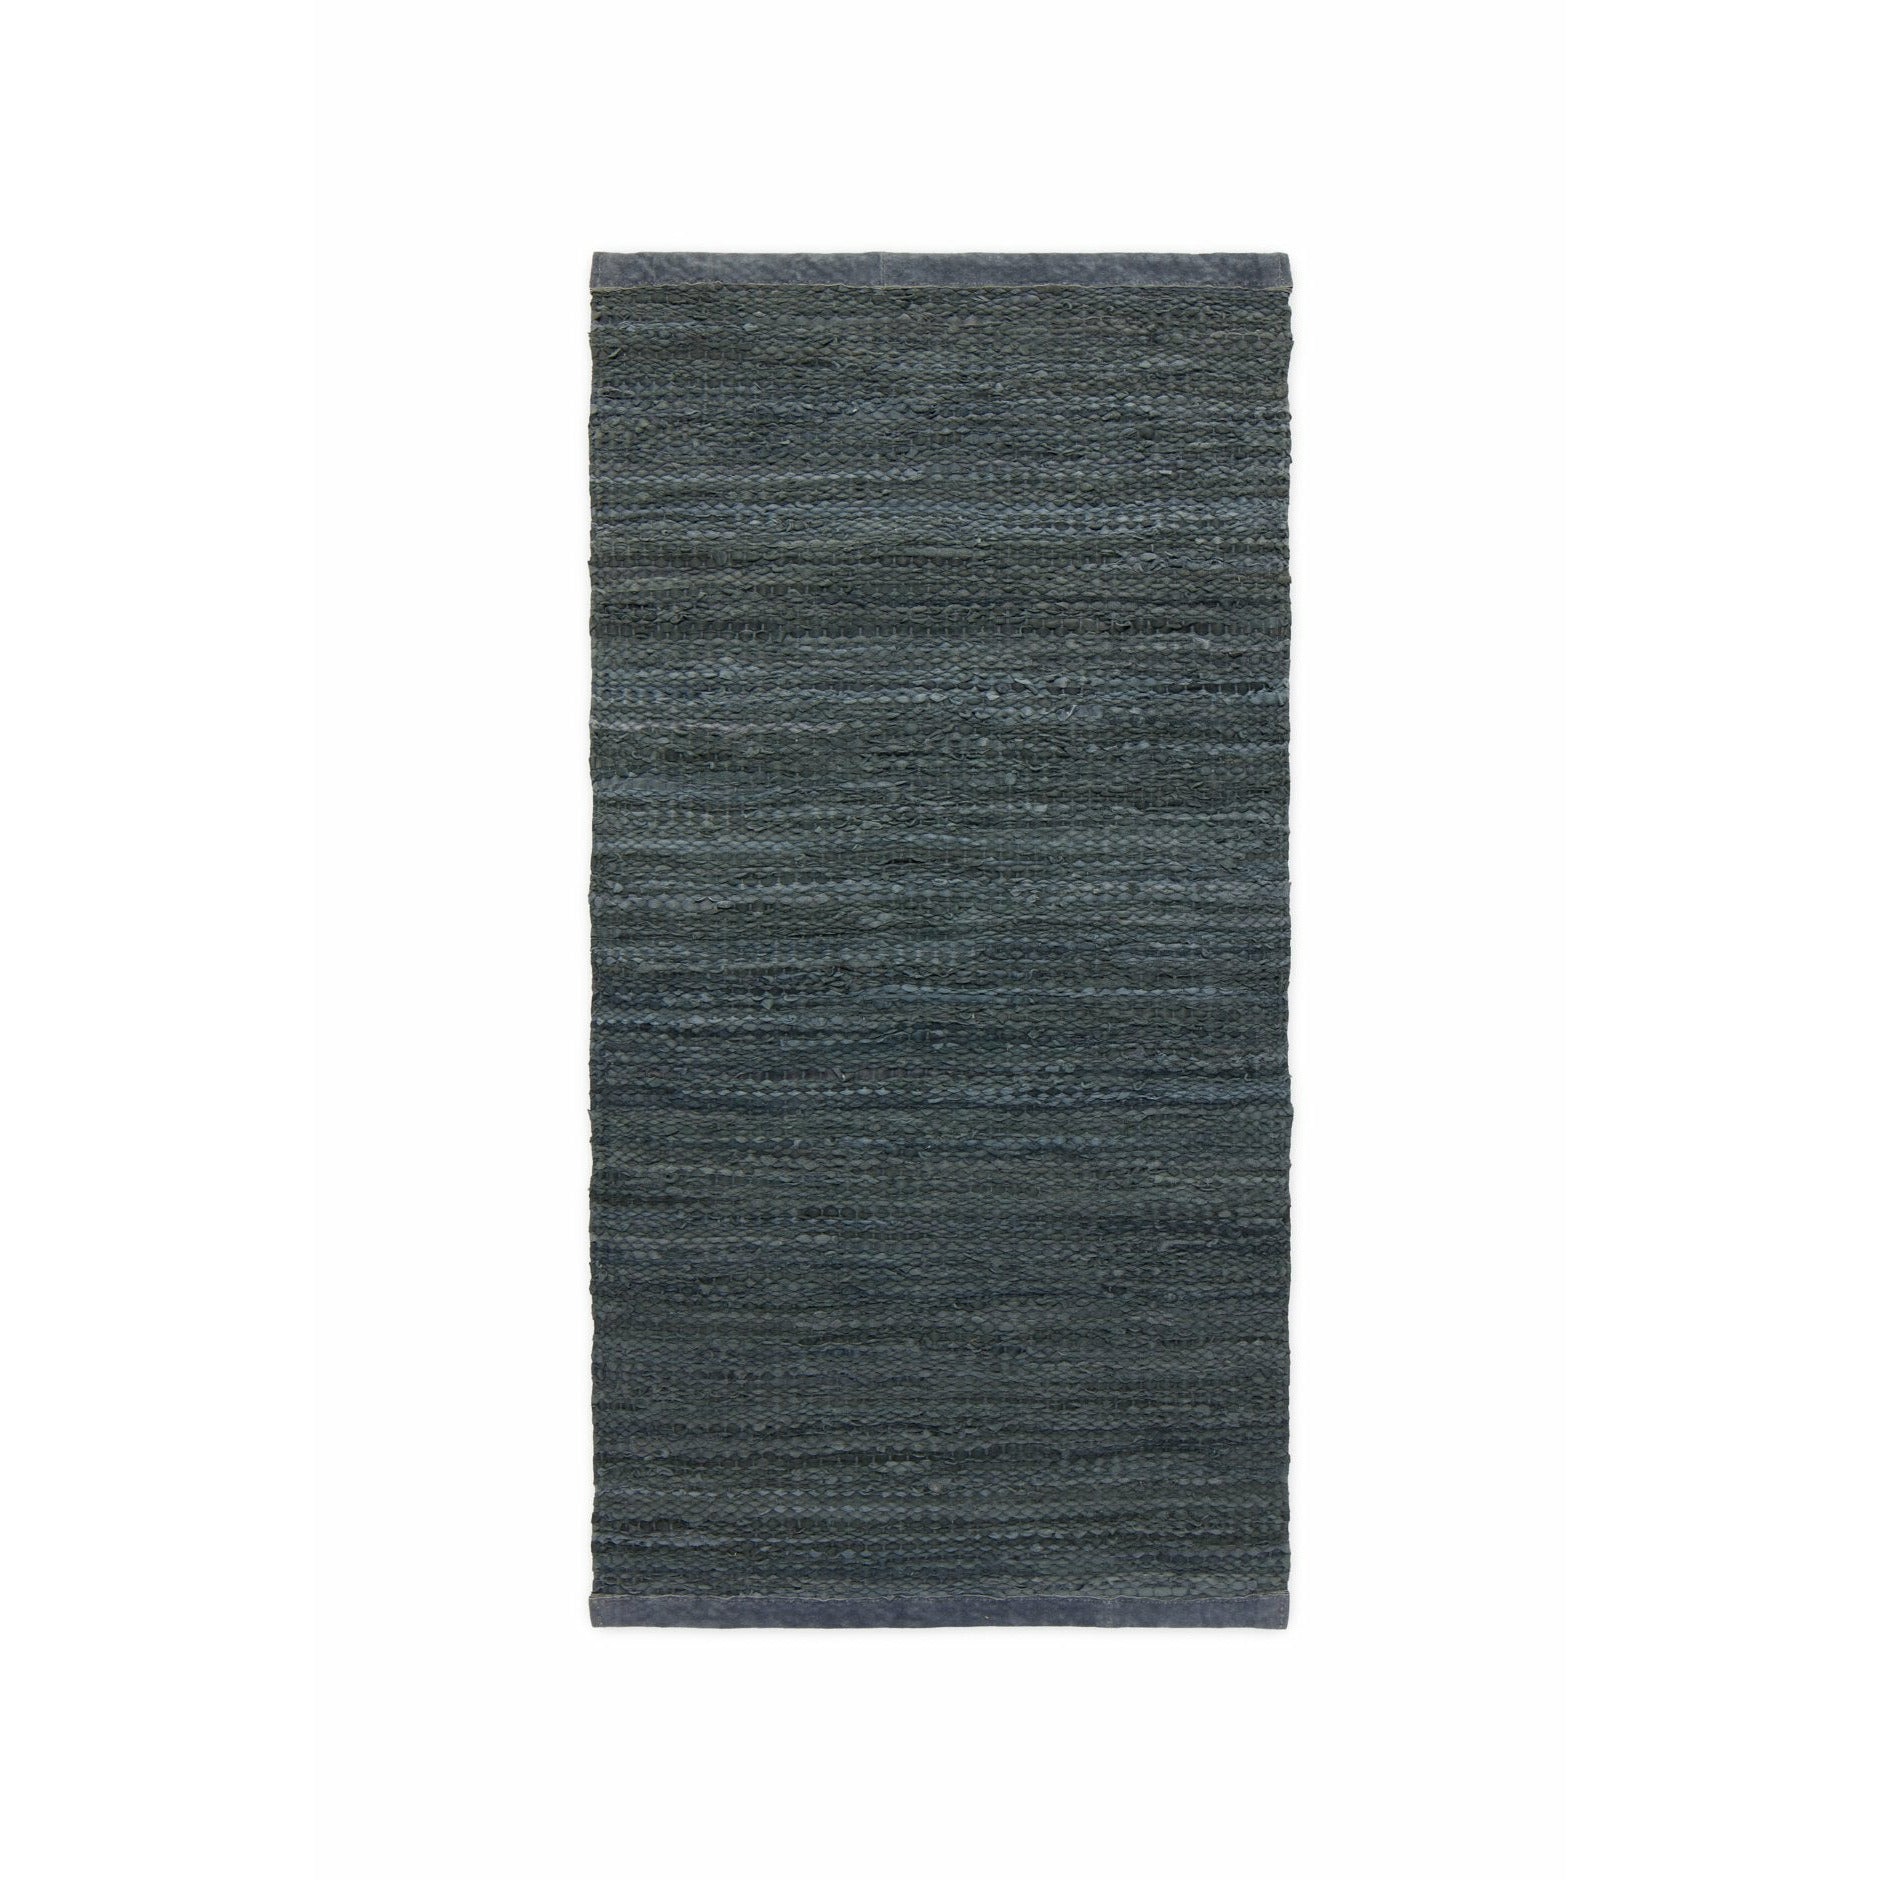 Rug Solid Leer vloerkleed donkergrijs, 200 x 300 cm